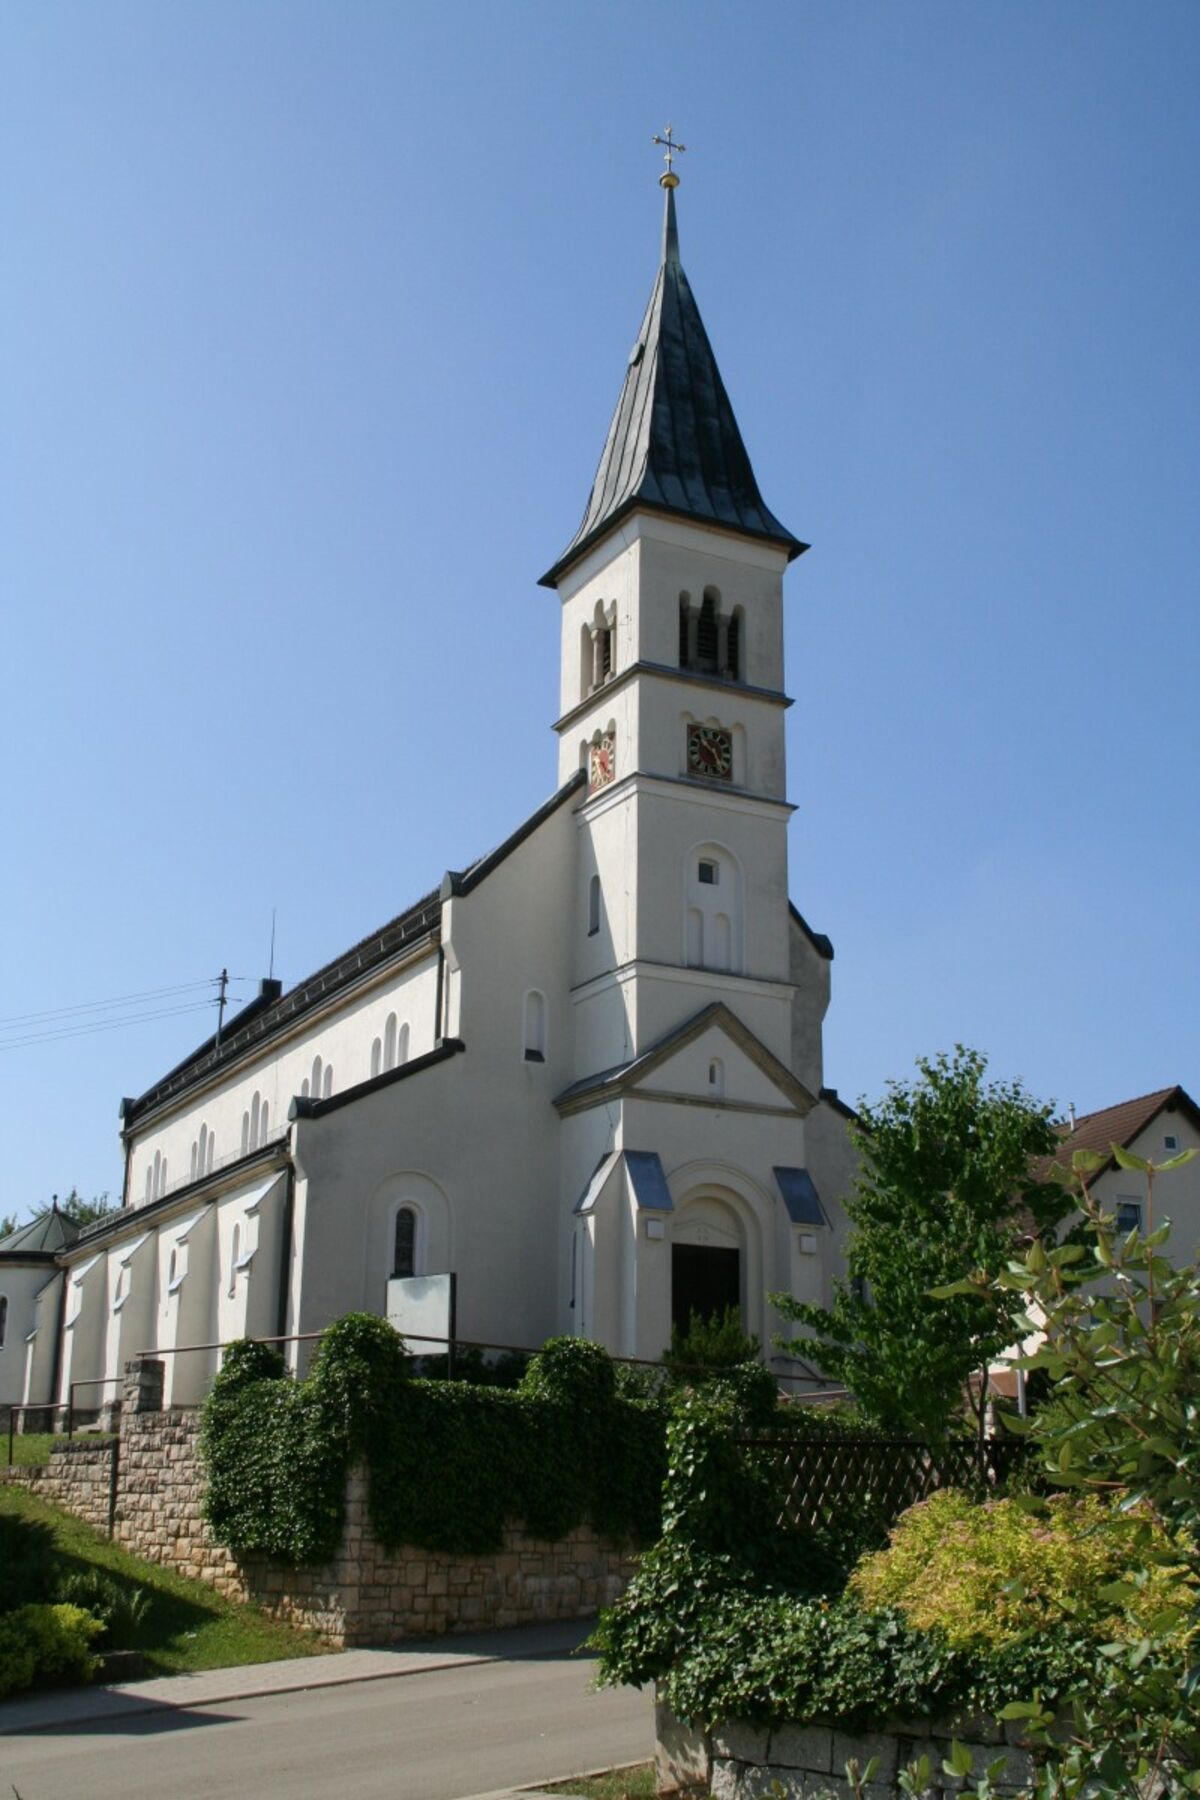 St. Katharina